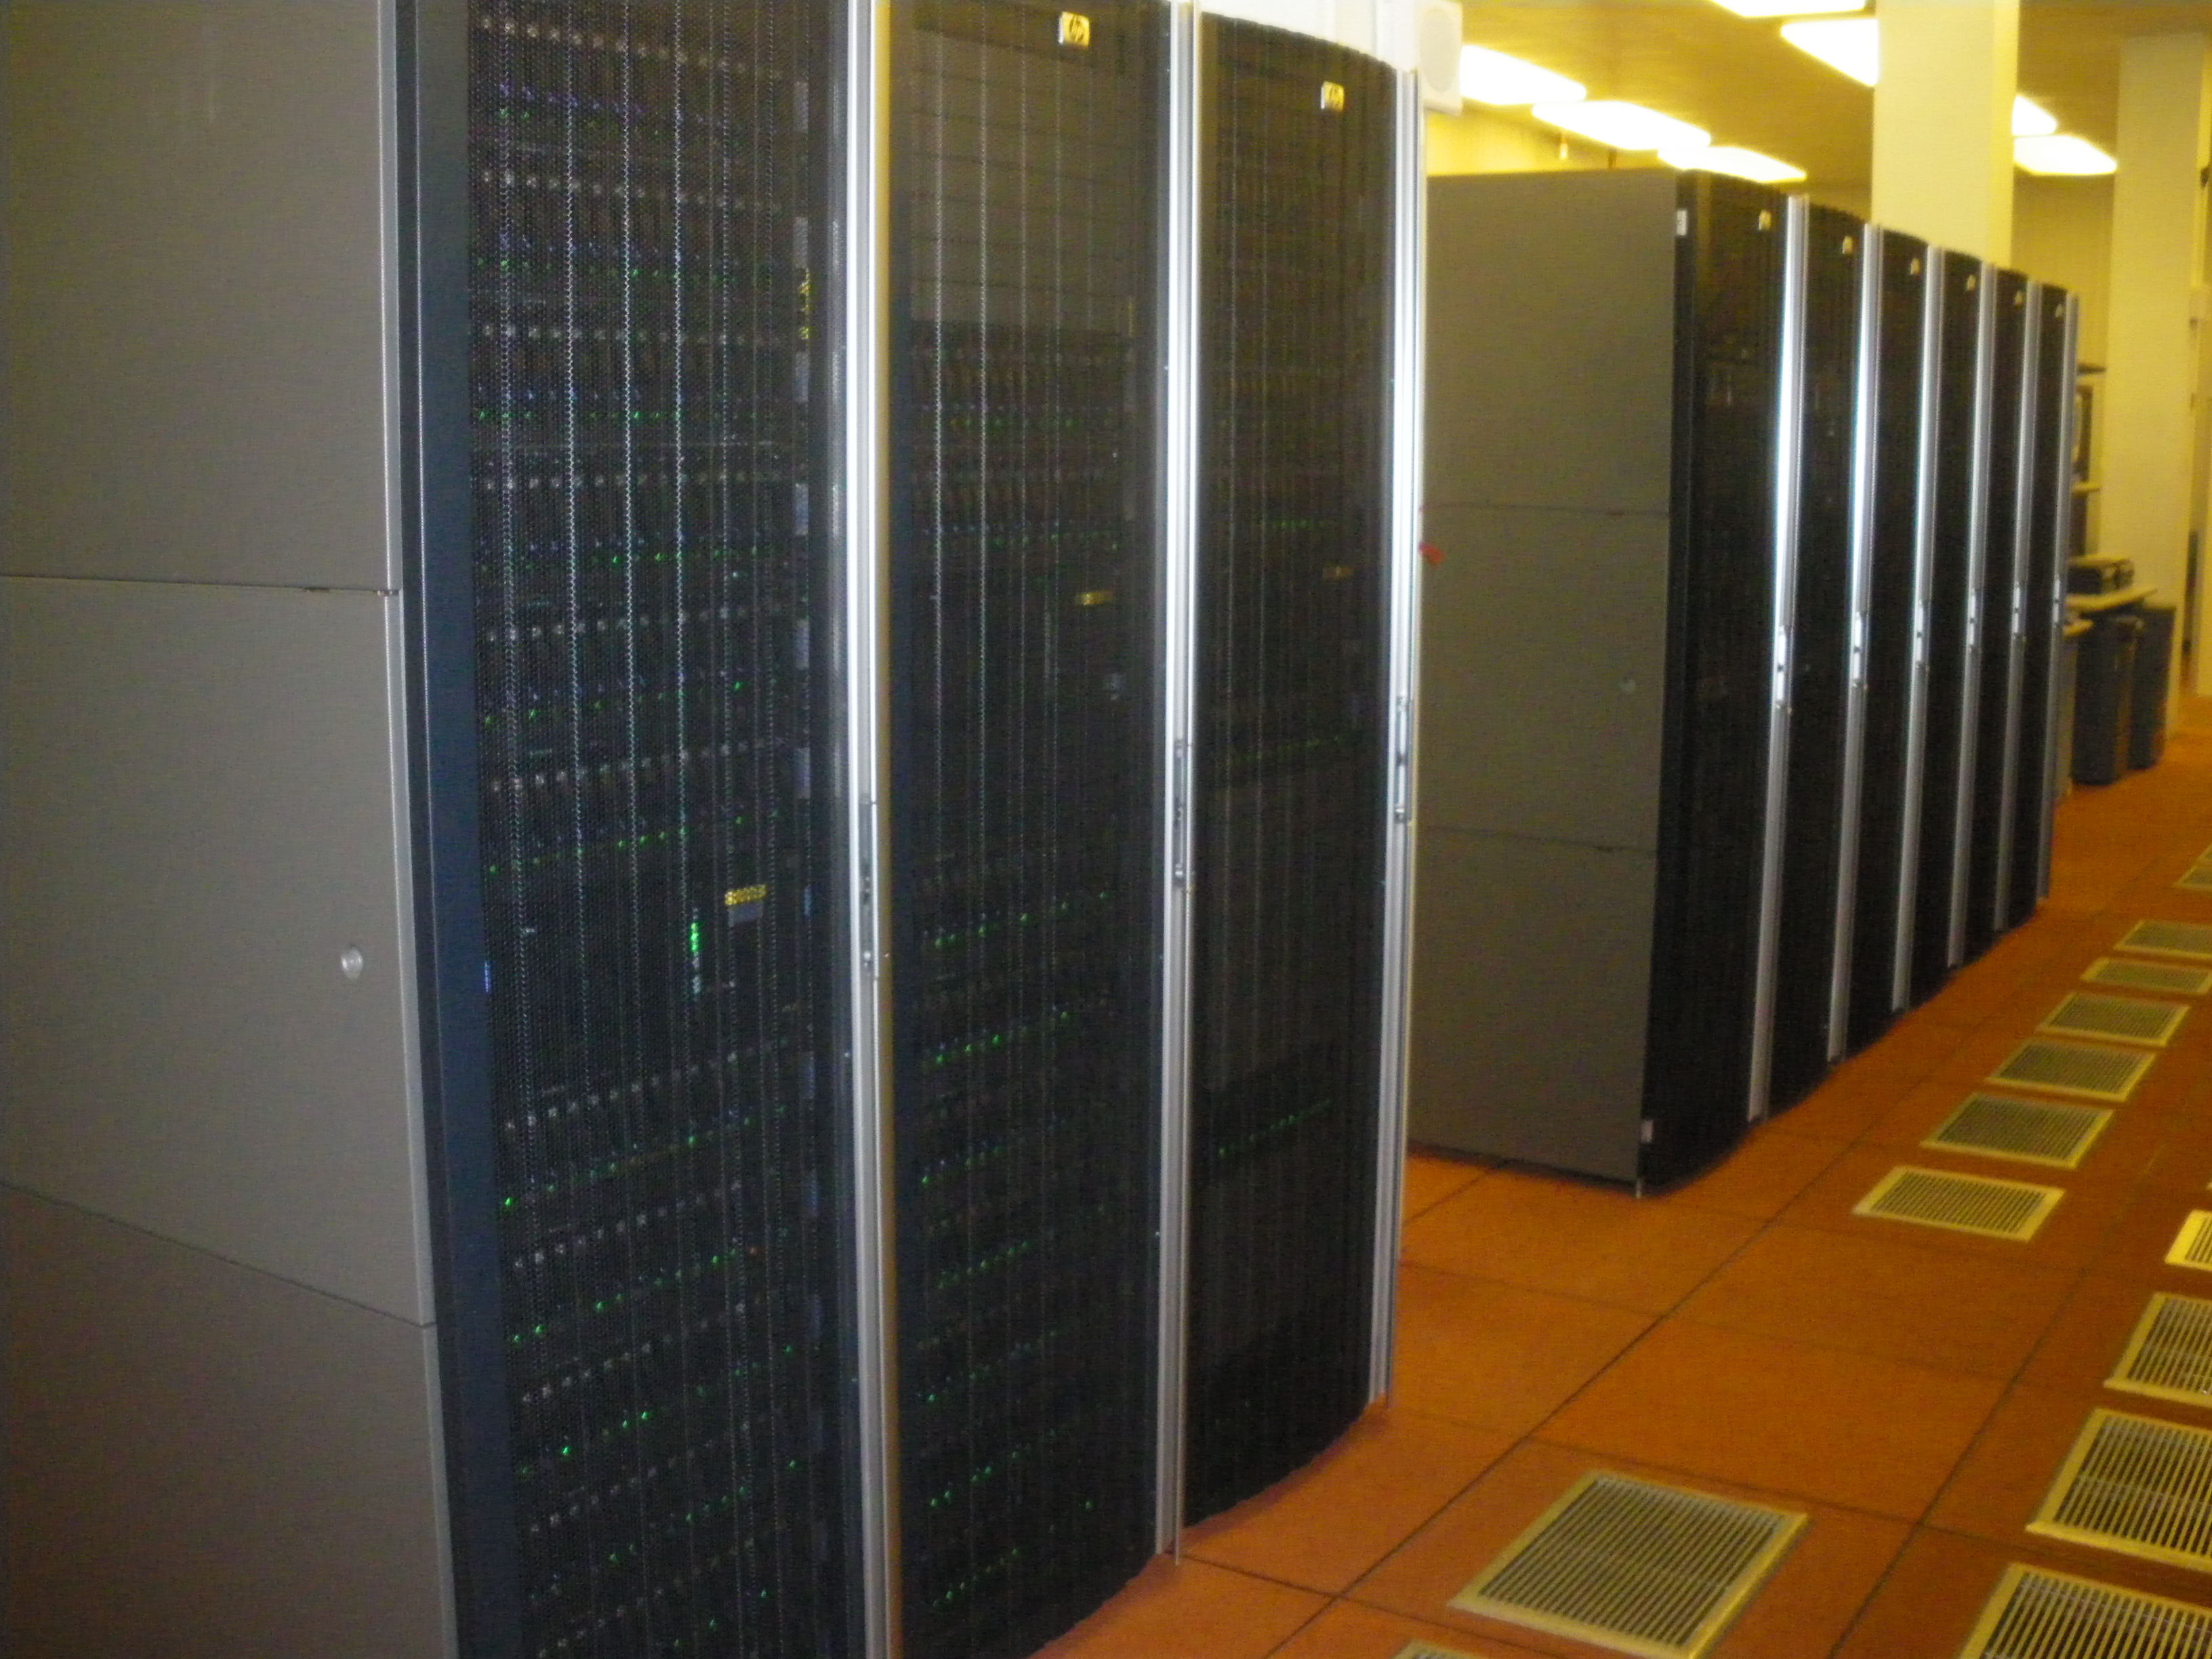 W407 server racks